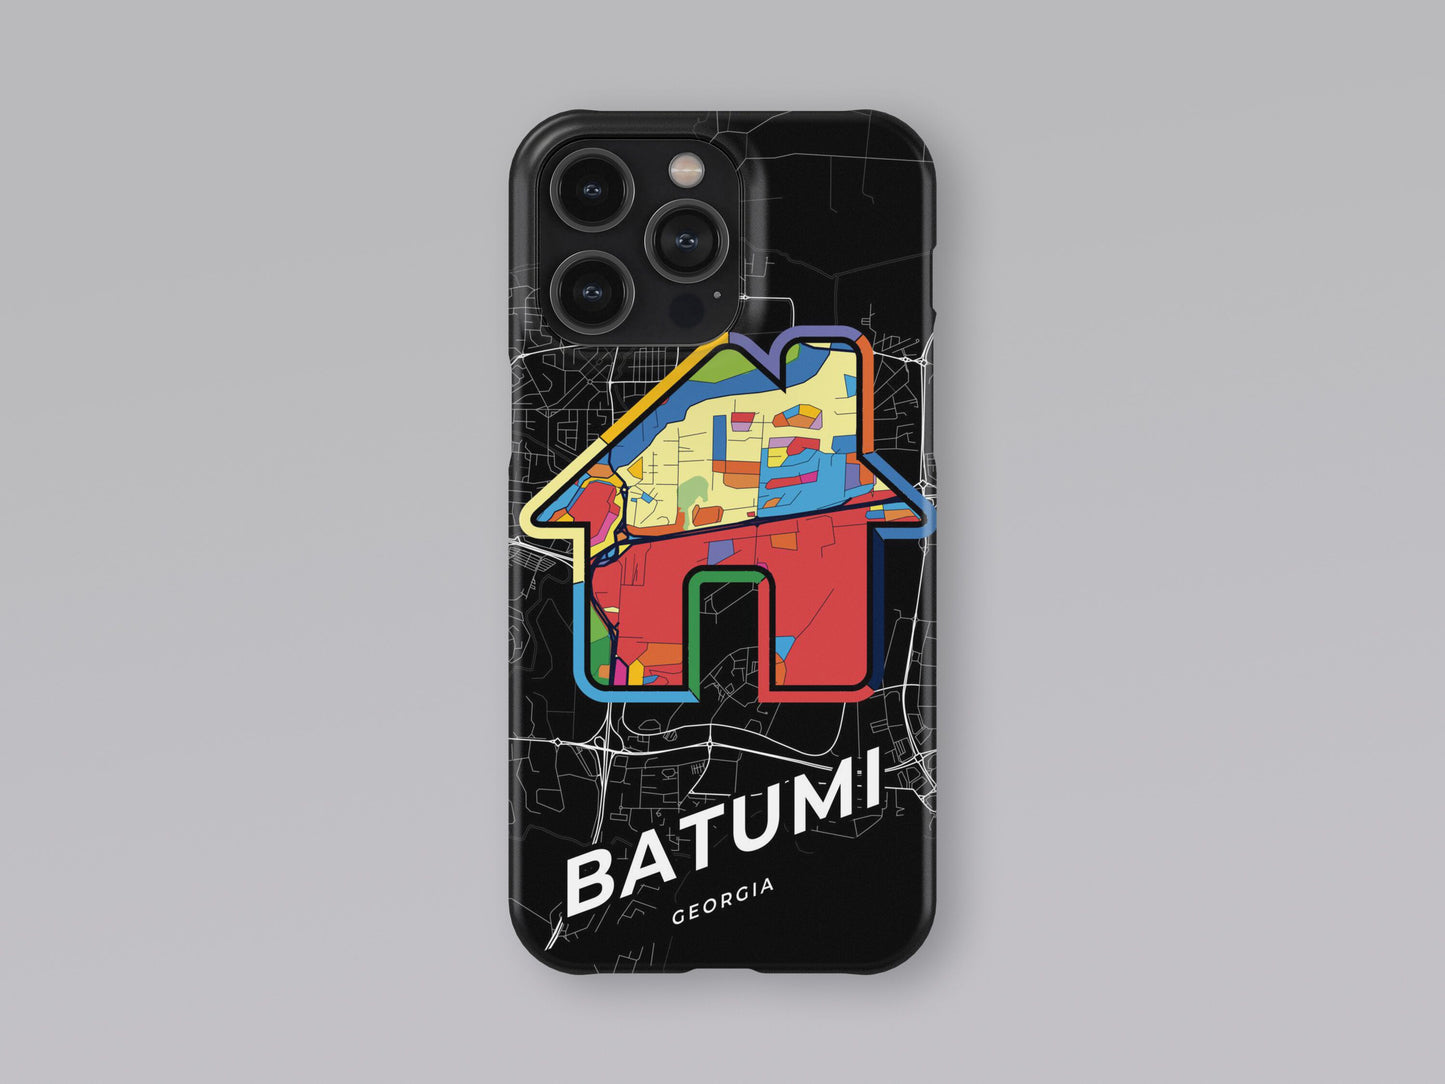 Batumi Georgia slim phone case with colorful icon. Birthday, wedding or housewarming gift. Couple match cases. 3